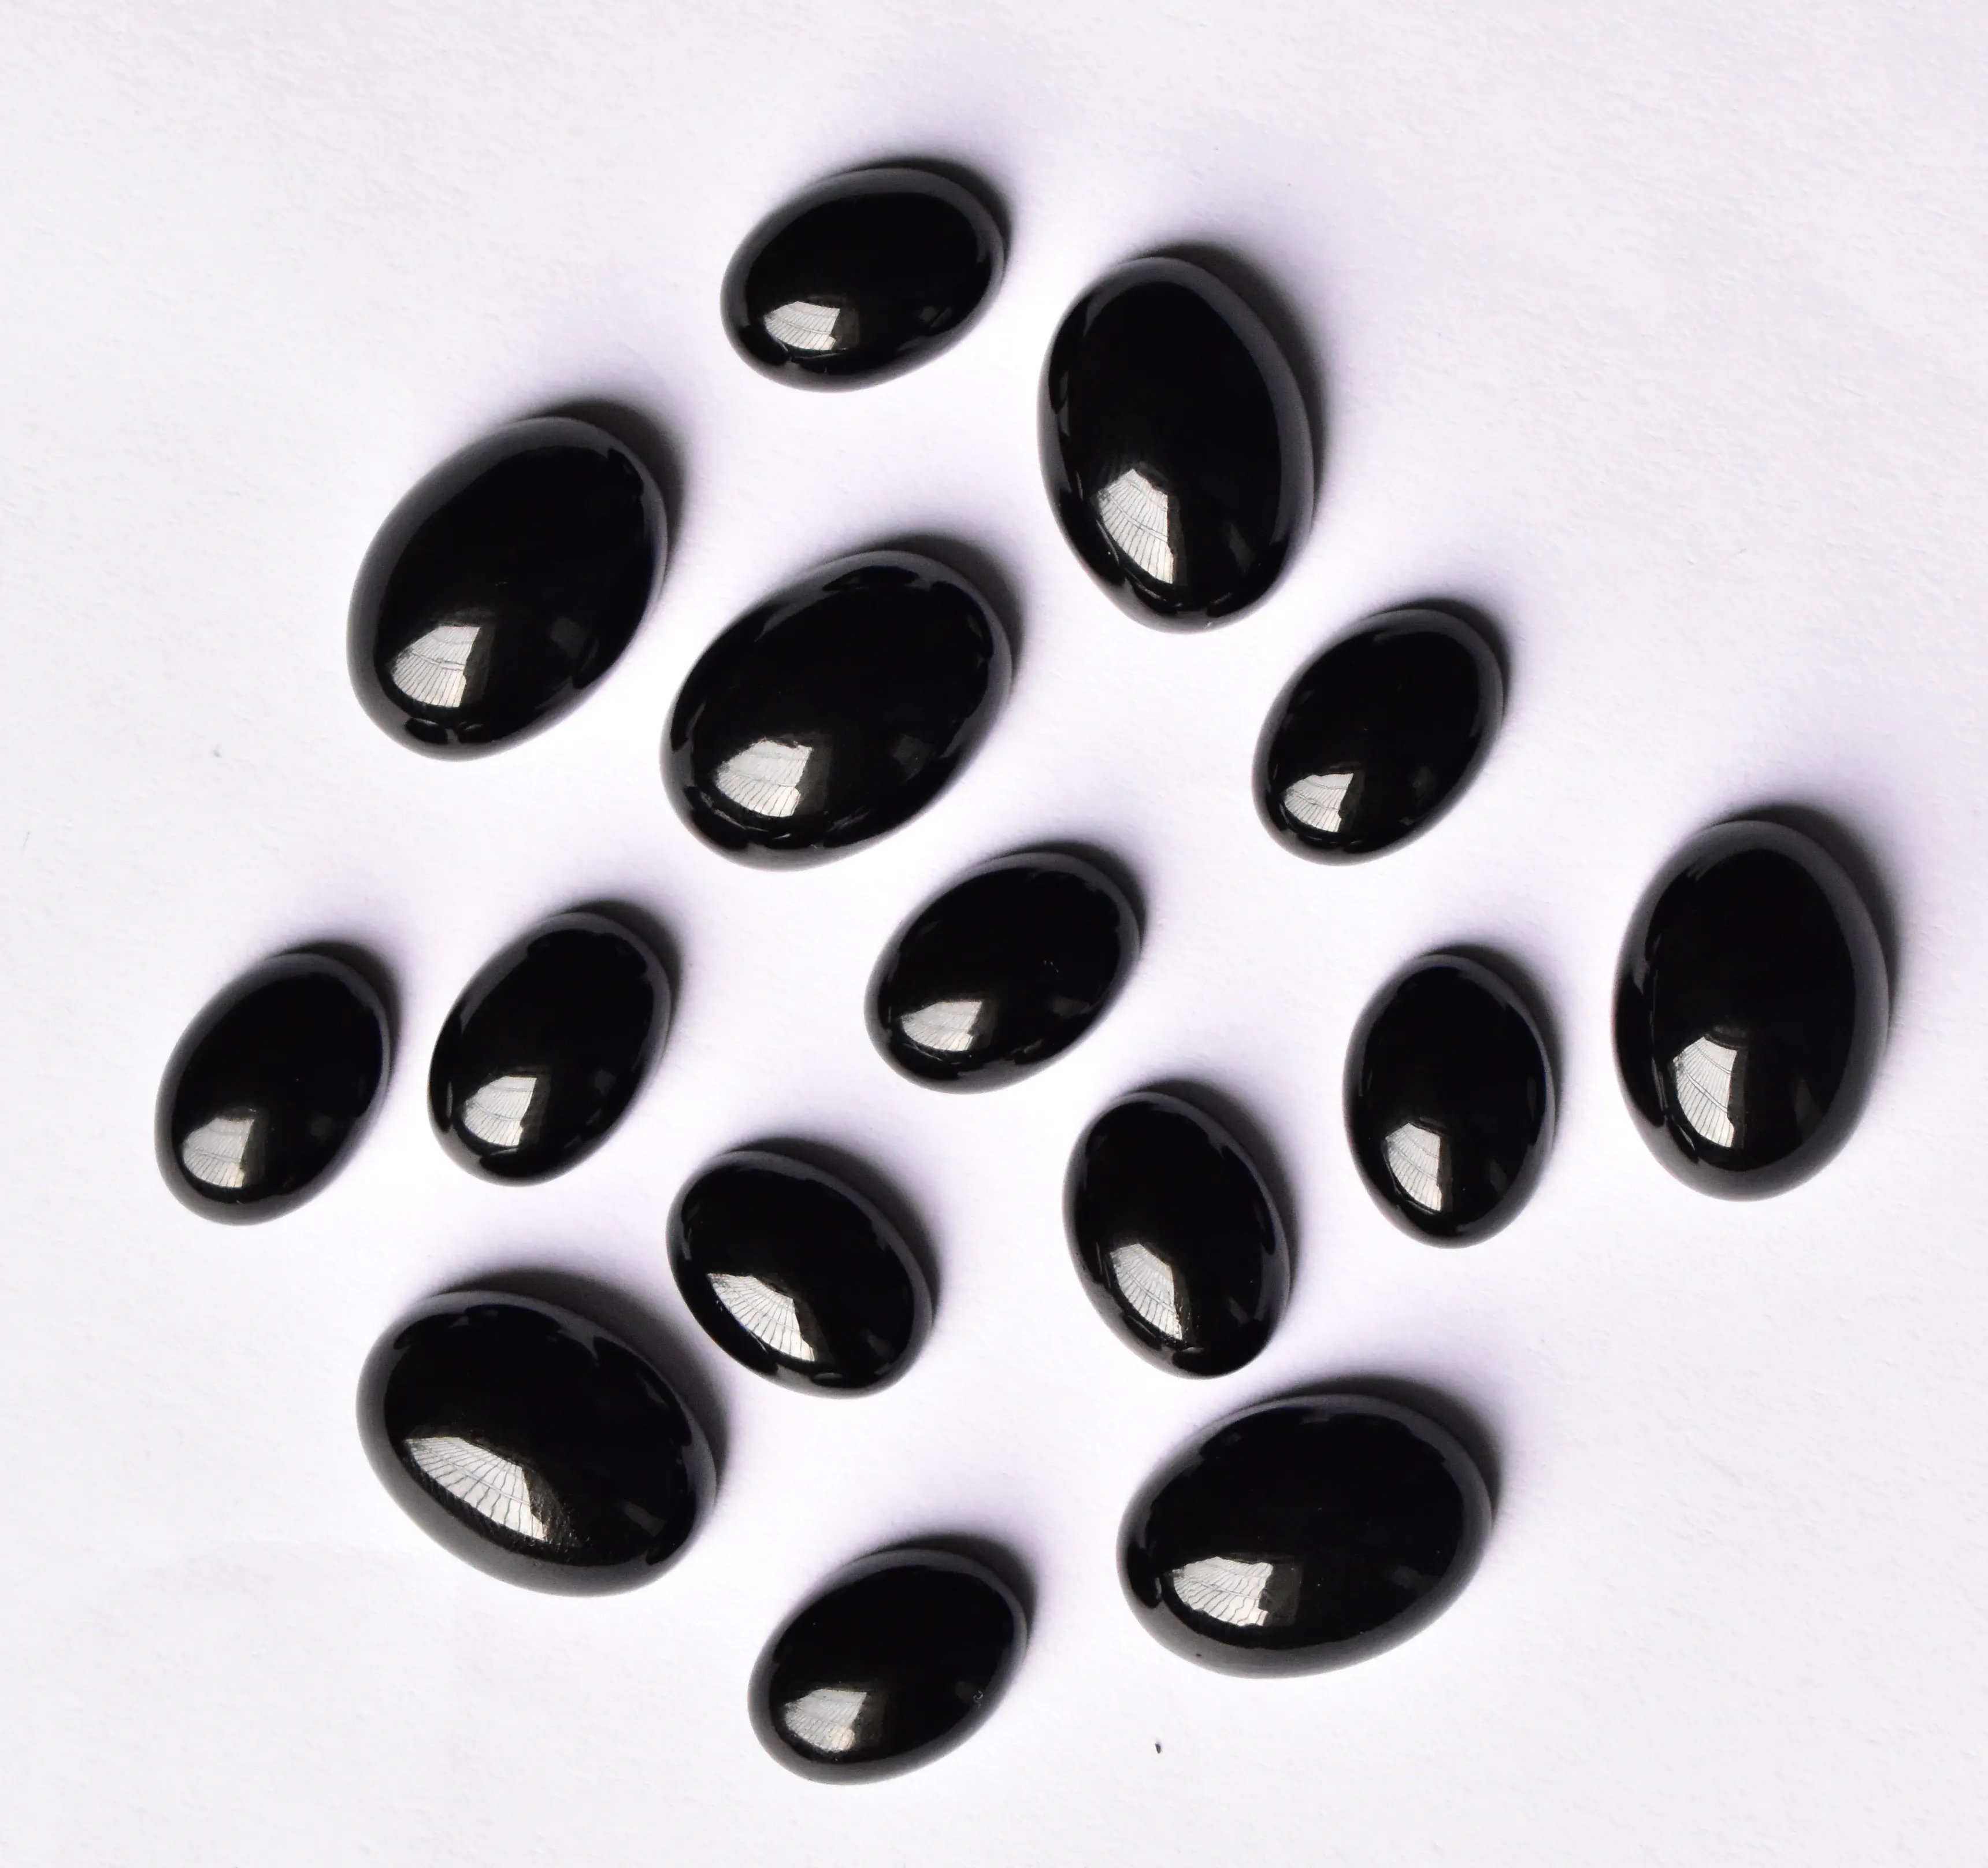 Black Onyx Oval dikalibrasi Cabochon Natural batu permata longgar 5X3mm sampai 30X20mm ukuran yang tersedia batu akik hitam.